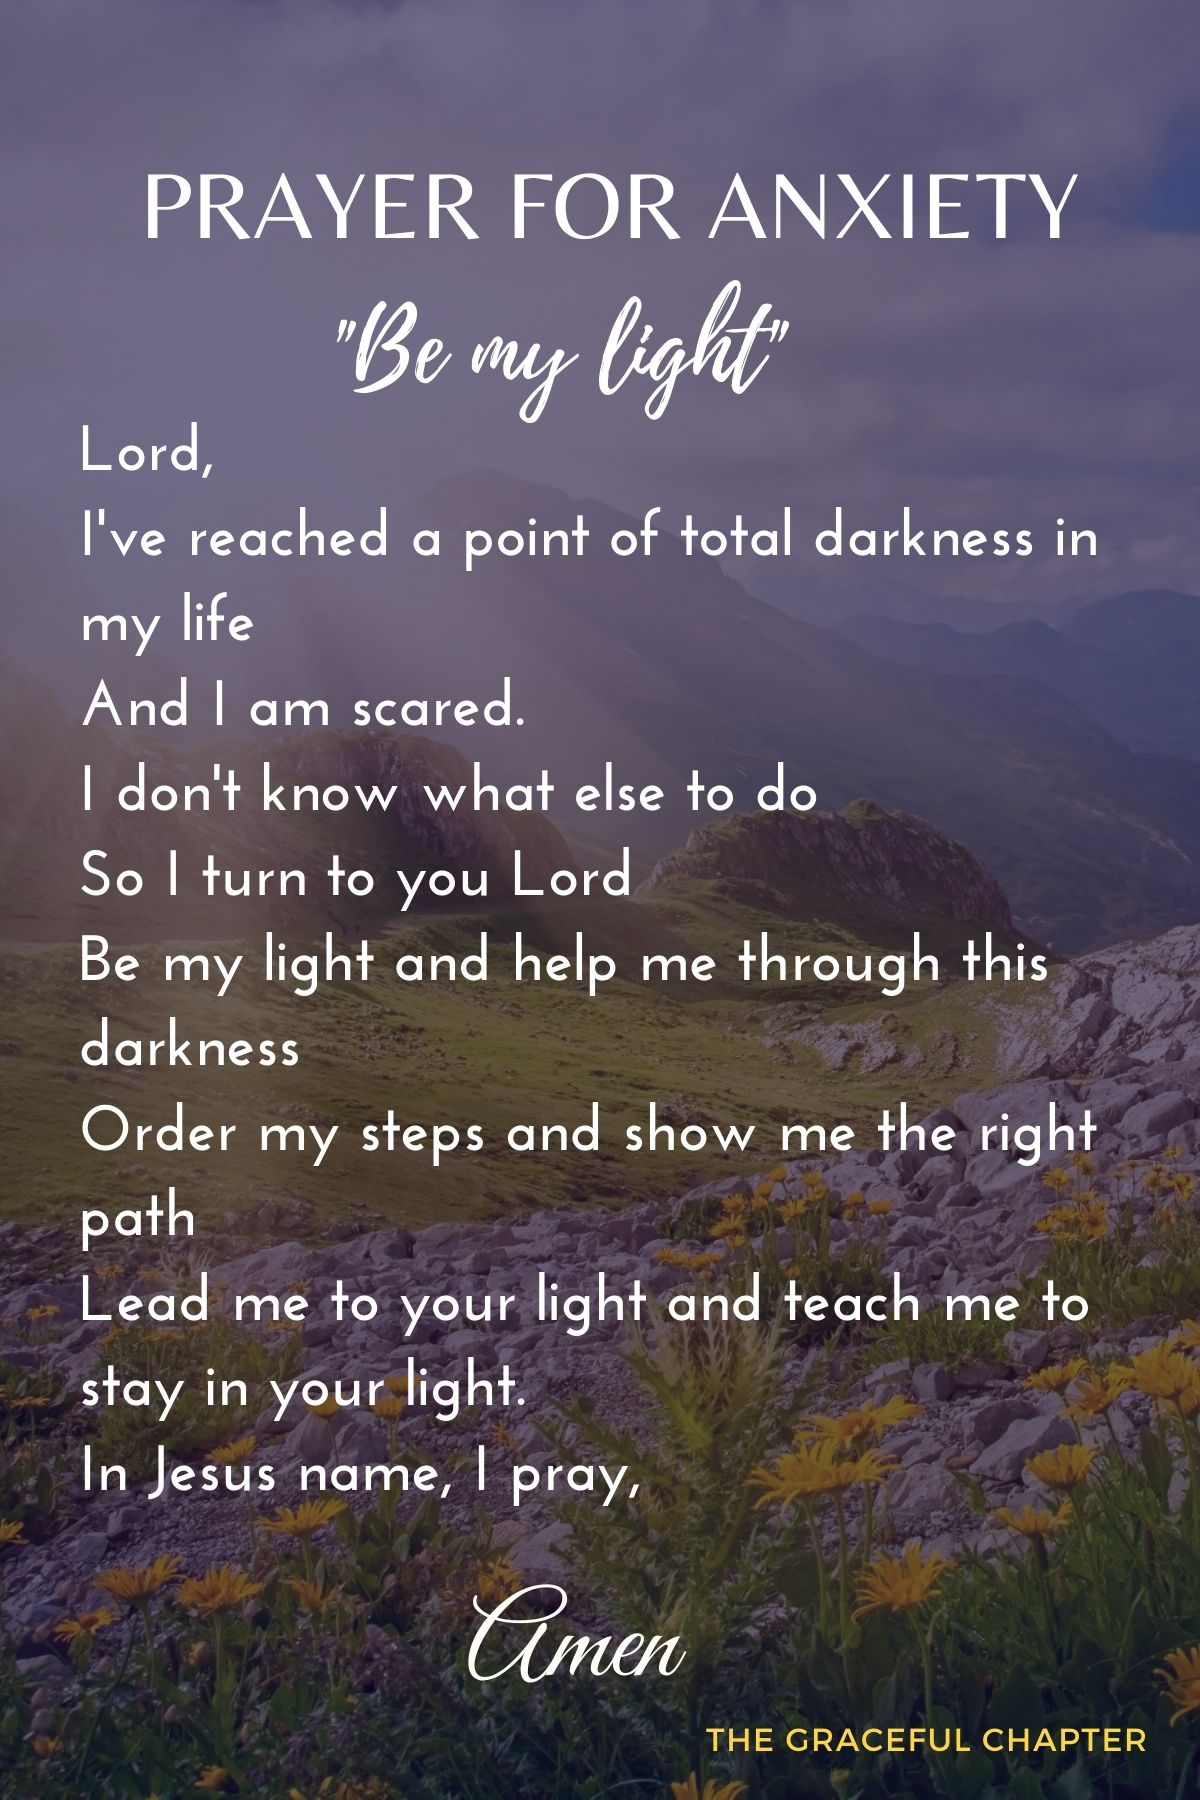 Anxiety prayer - Be my light